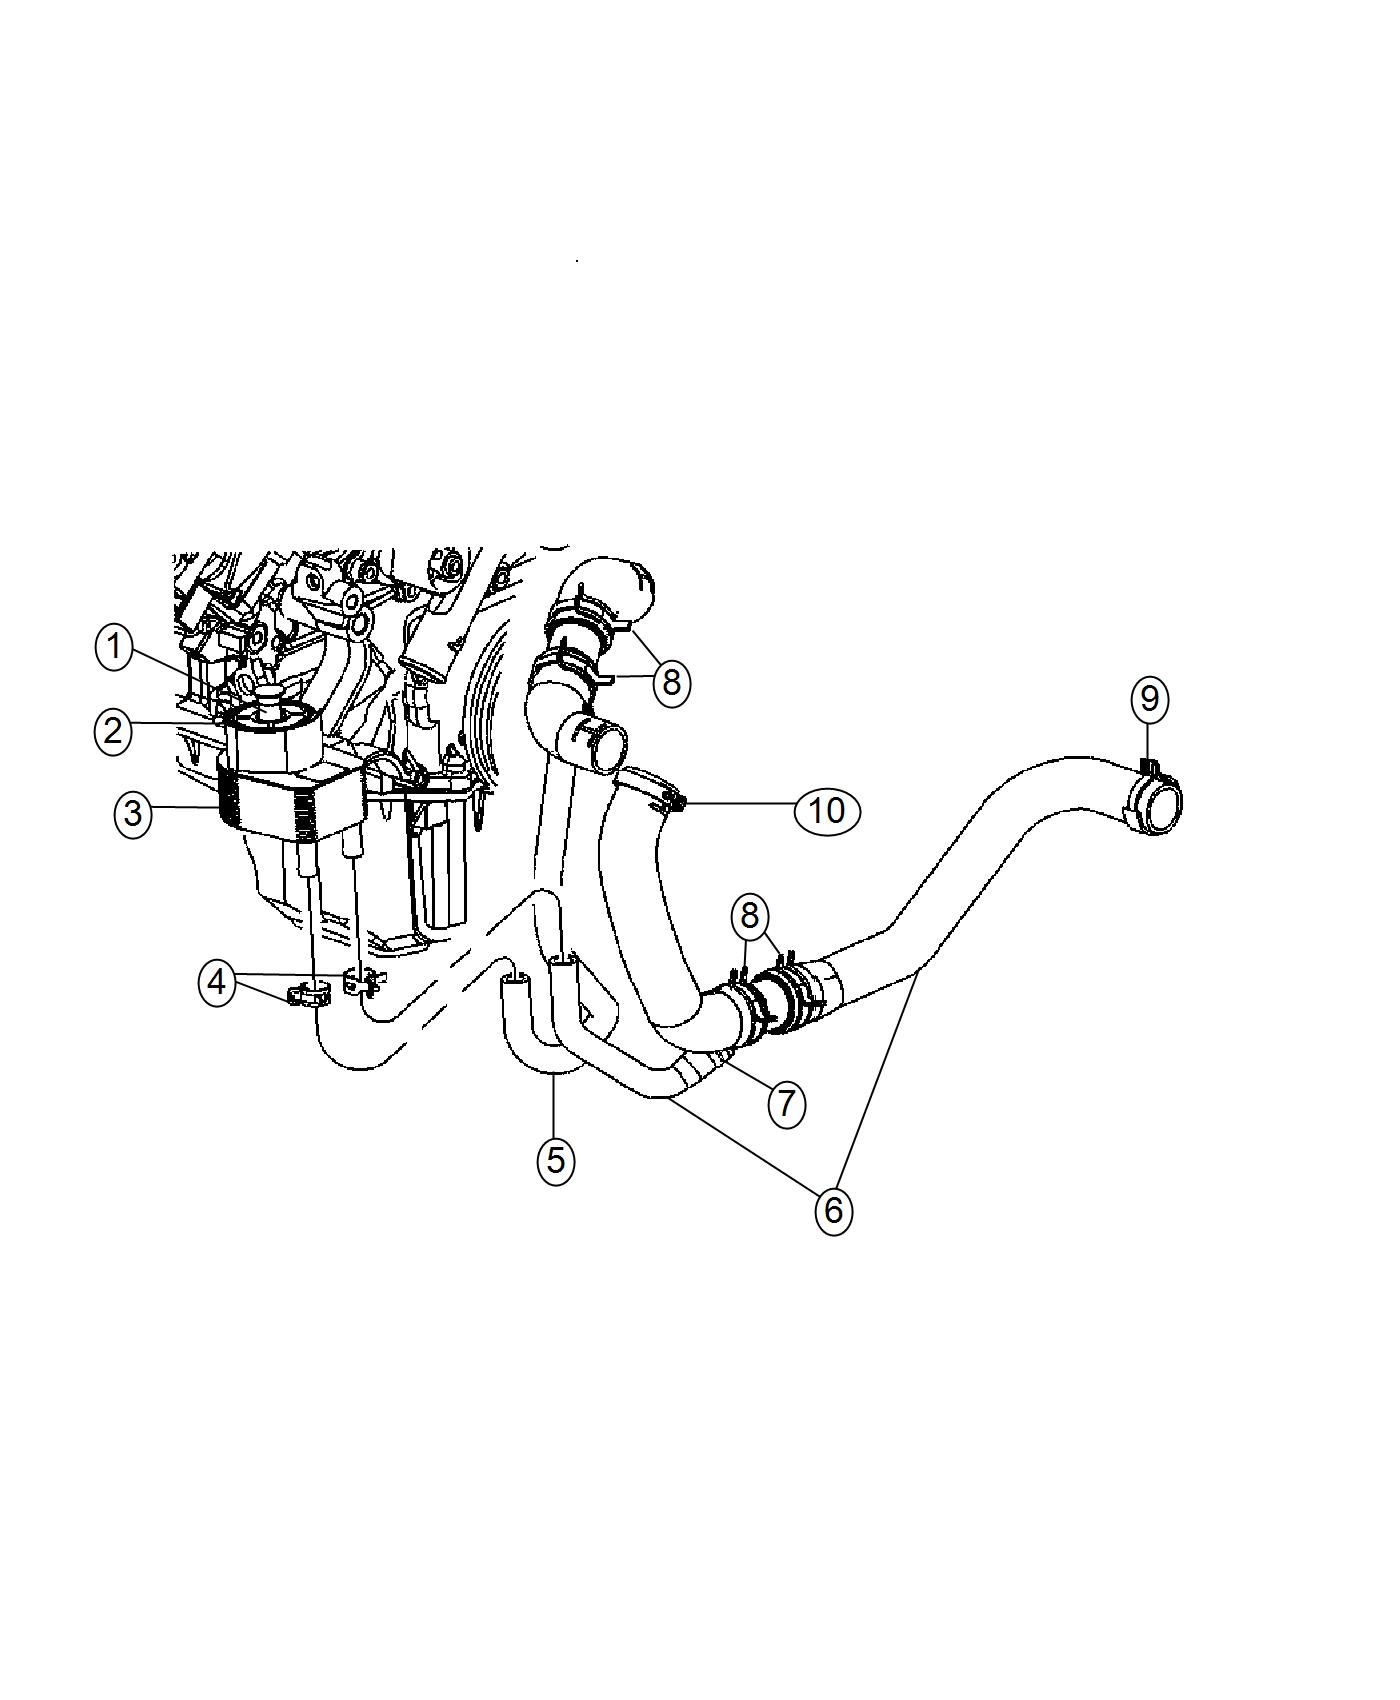 Engine Oil Cooler And Hoses/Tubes 6.4L. Diagram